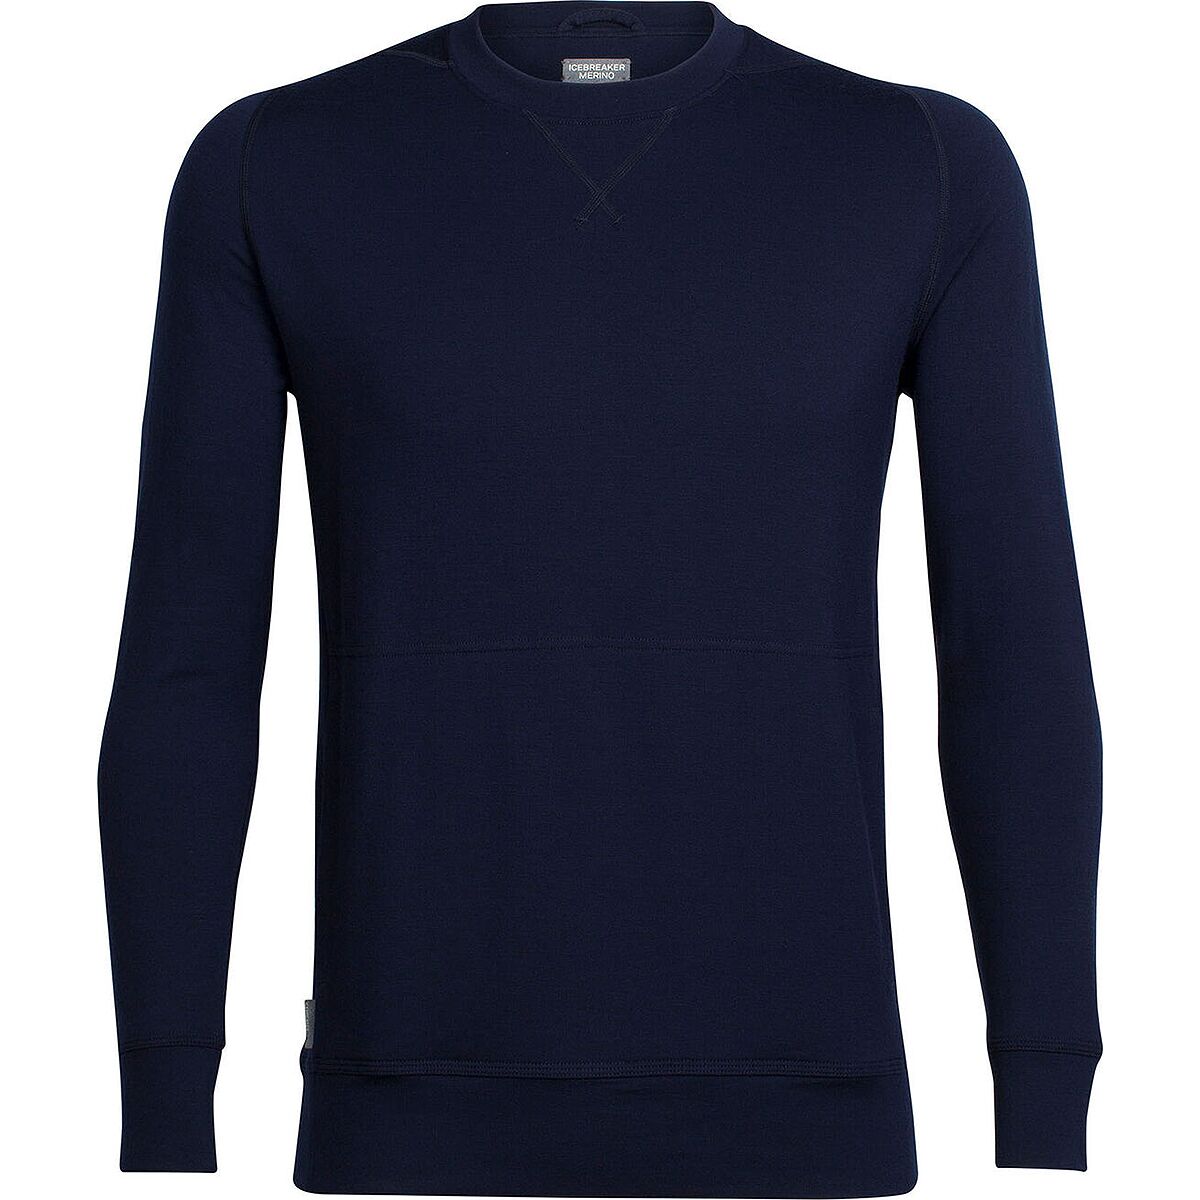 Shifter Long-Sleeve Crewe Sweater - Men